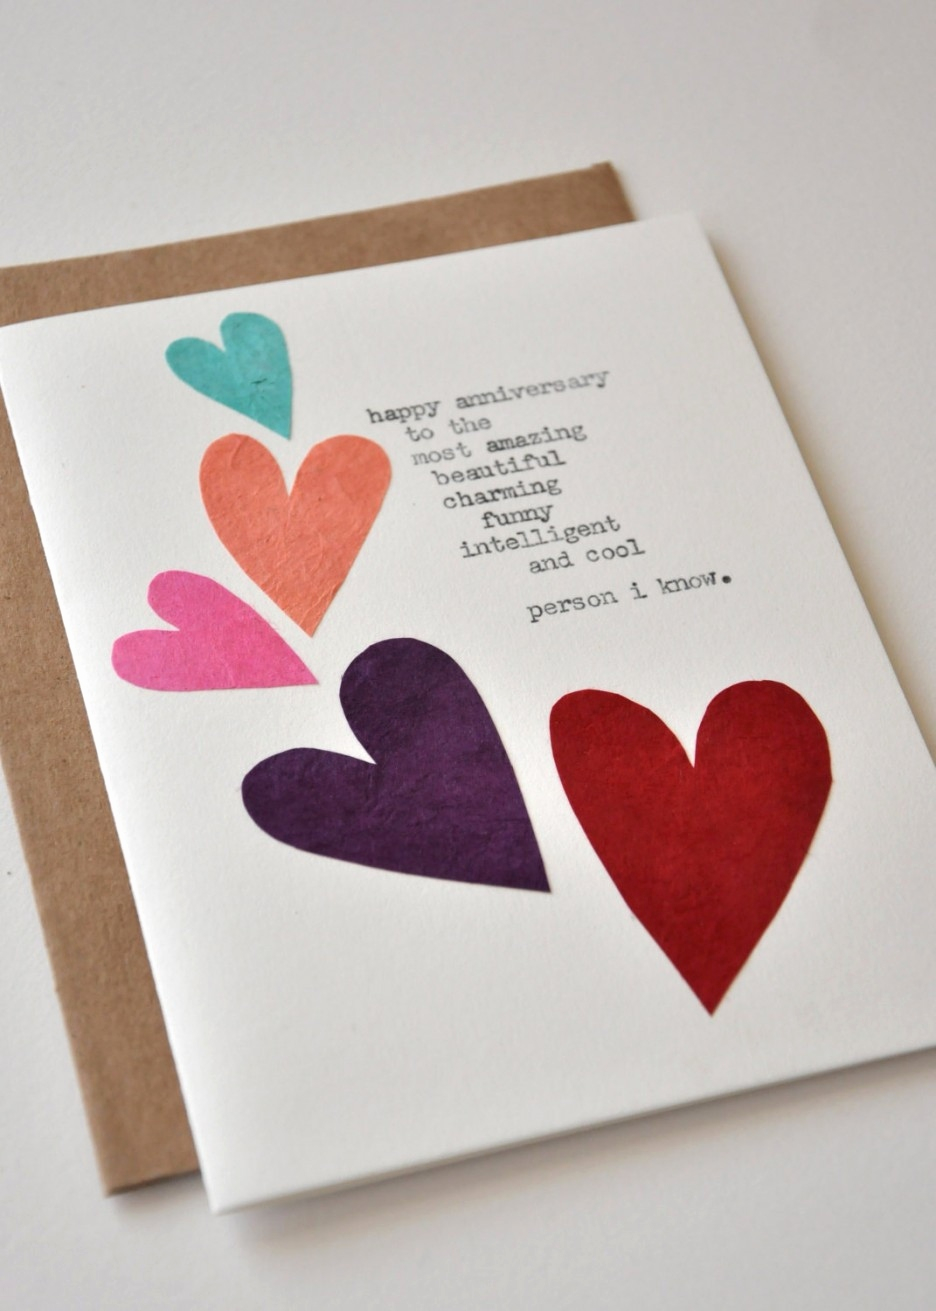 Handmade Birthday Card Ideas For Boyfriend Handmade Birthday Cards For Boyfriend Ideas Fresh 166 Best Gifts For